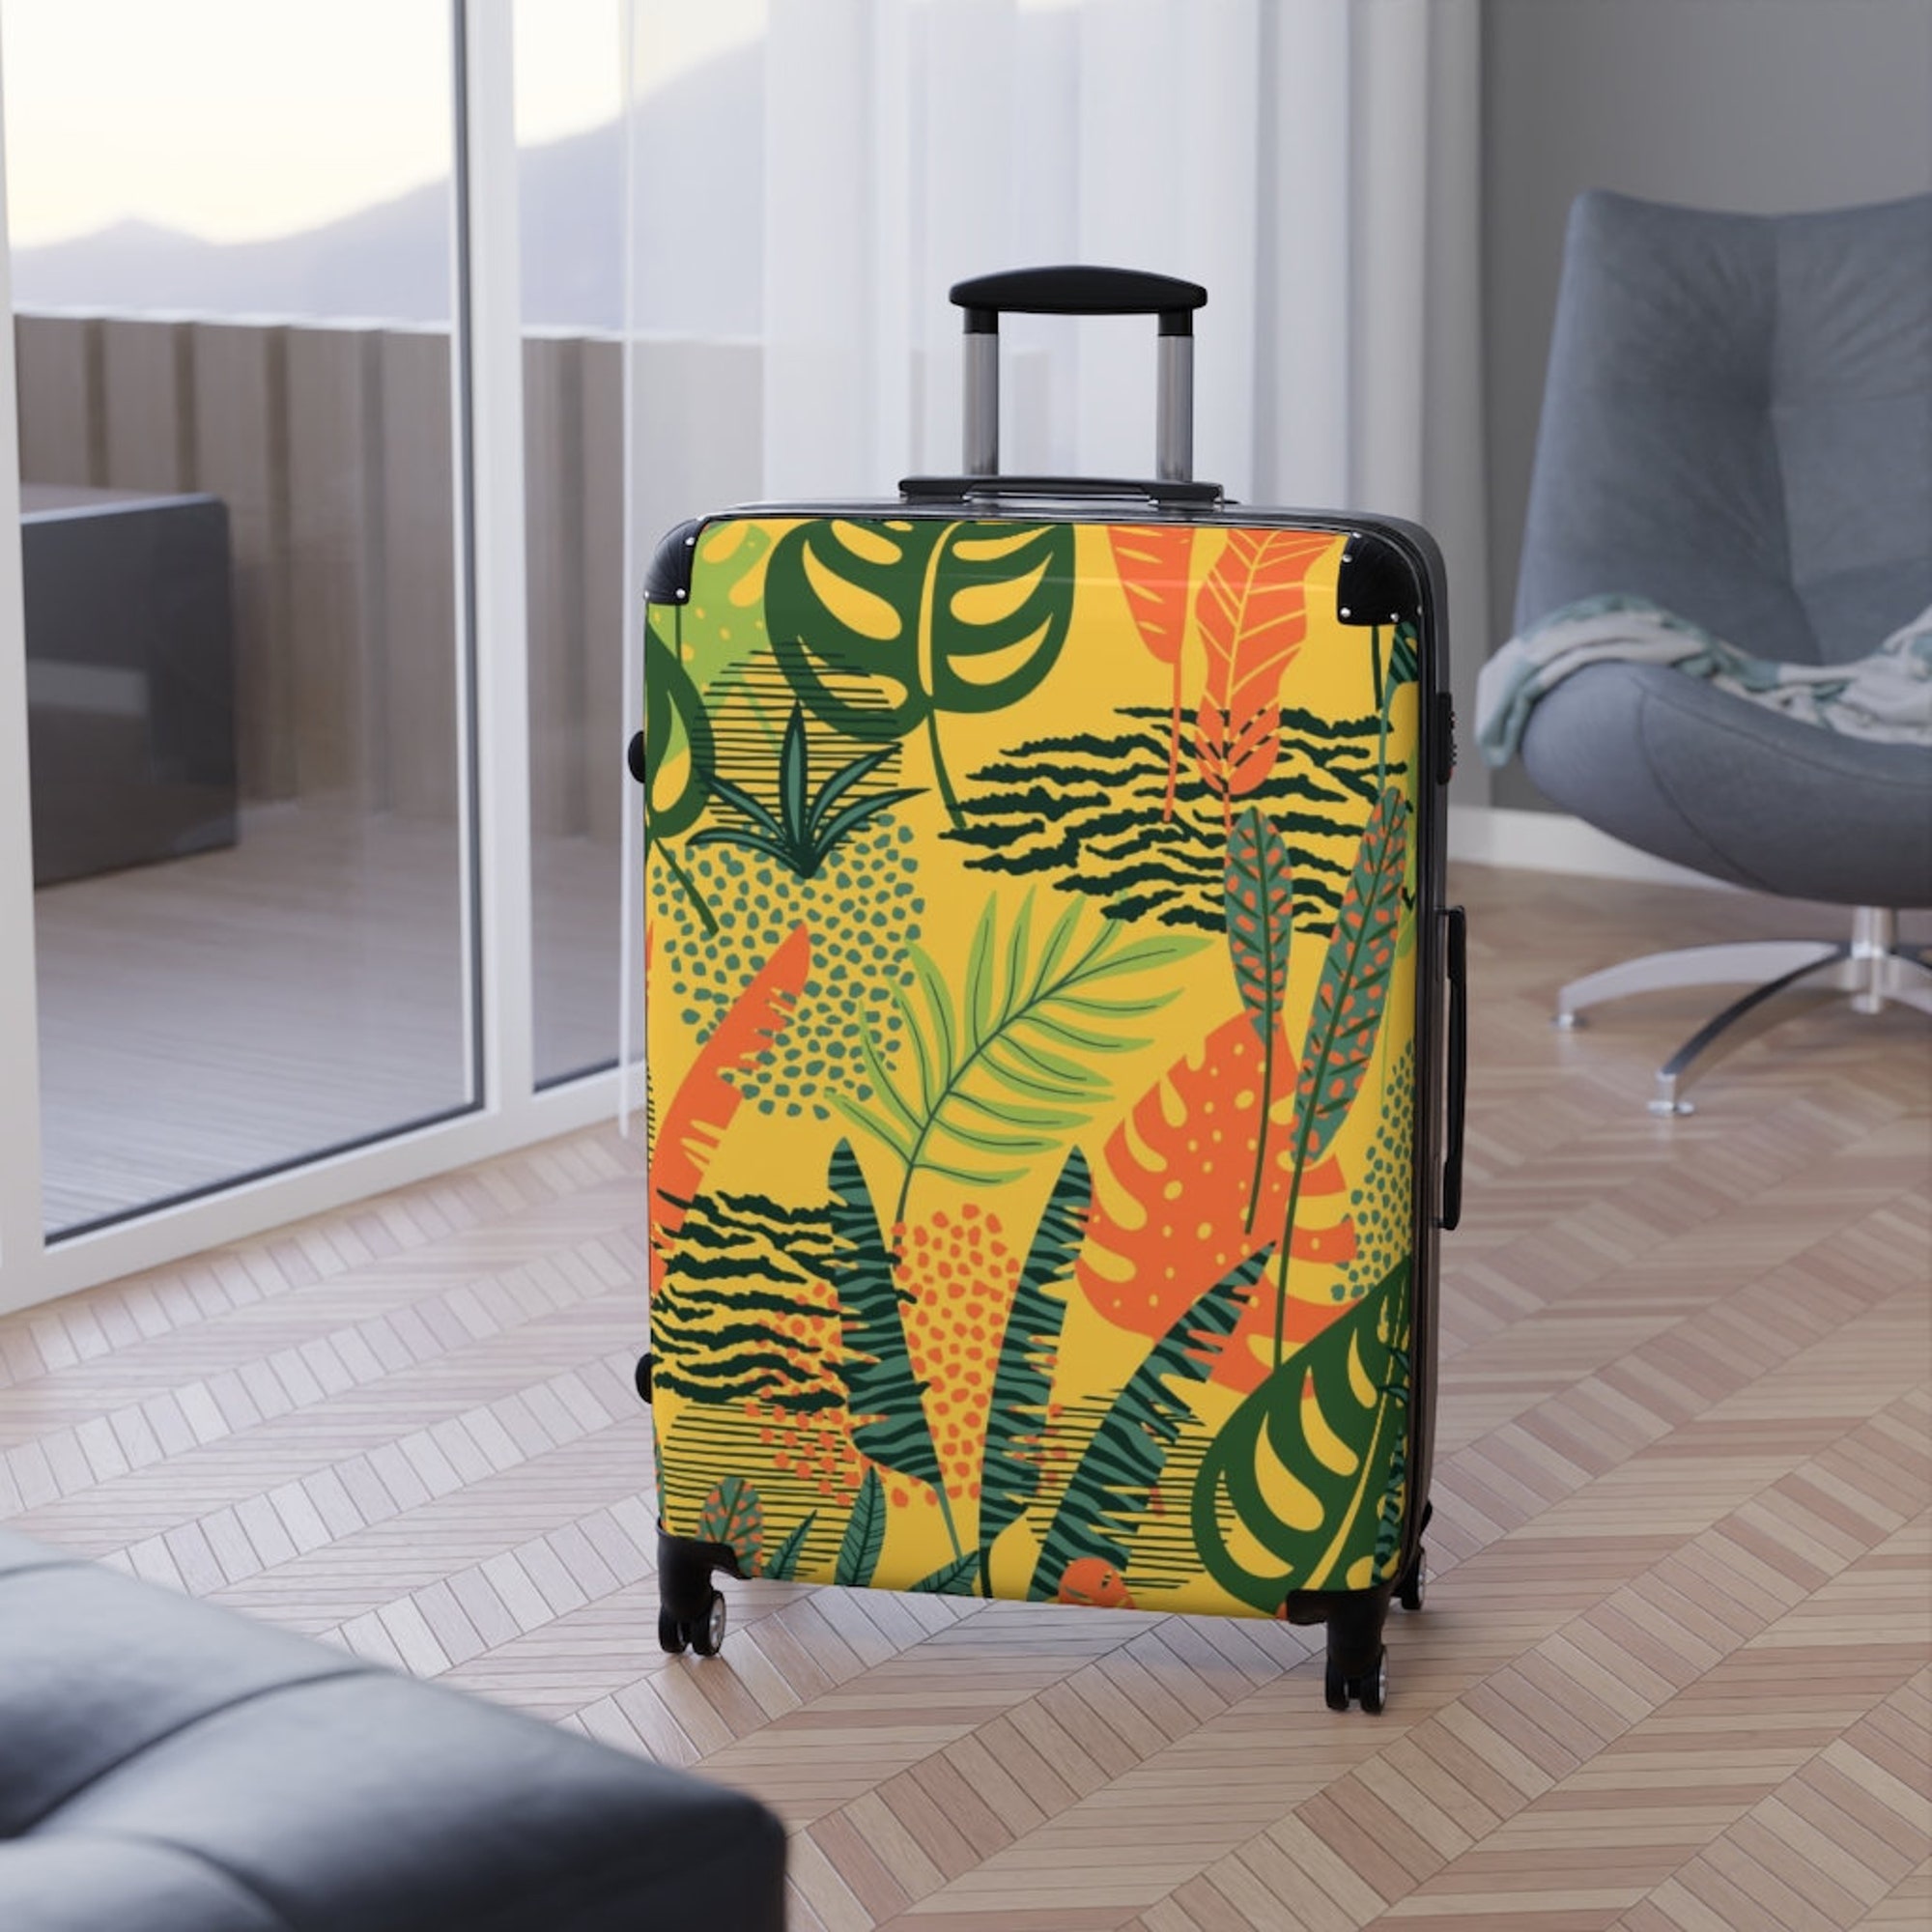 The Sylvinia Suitcase